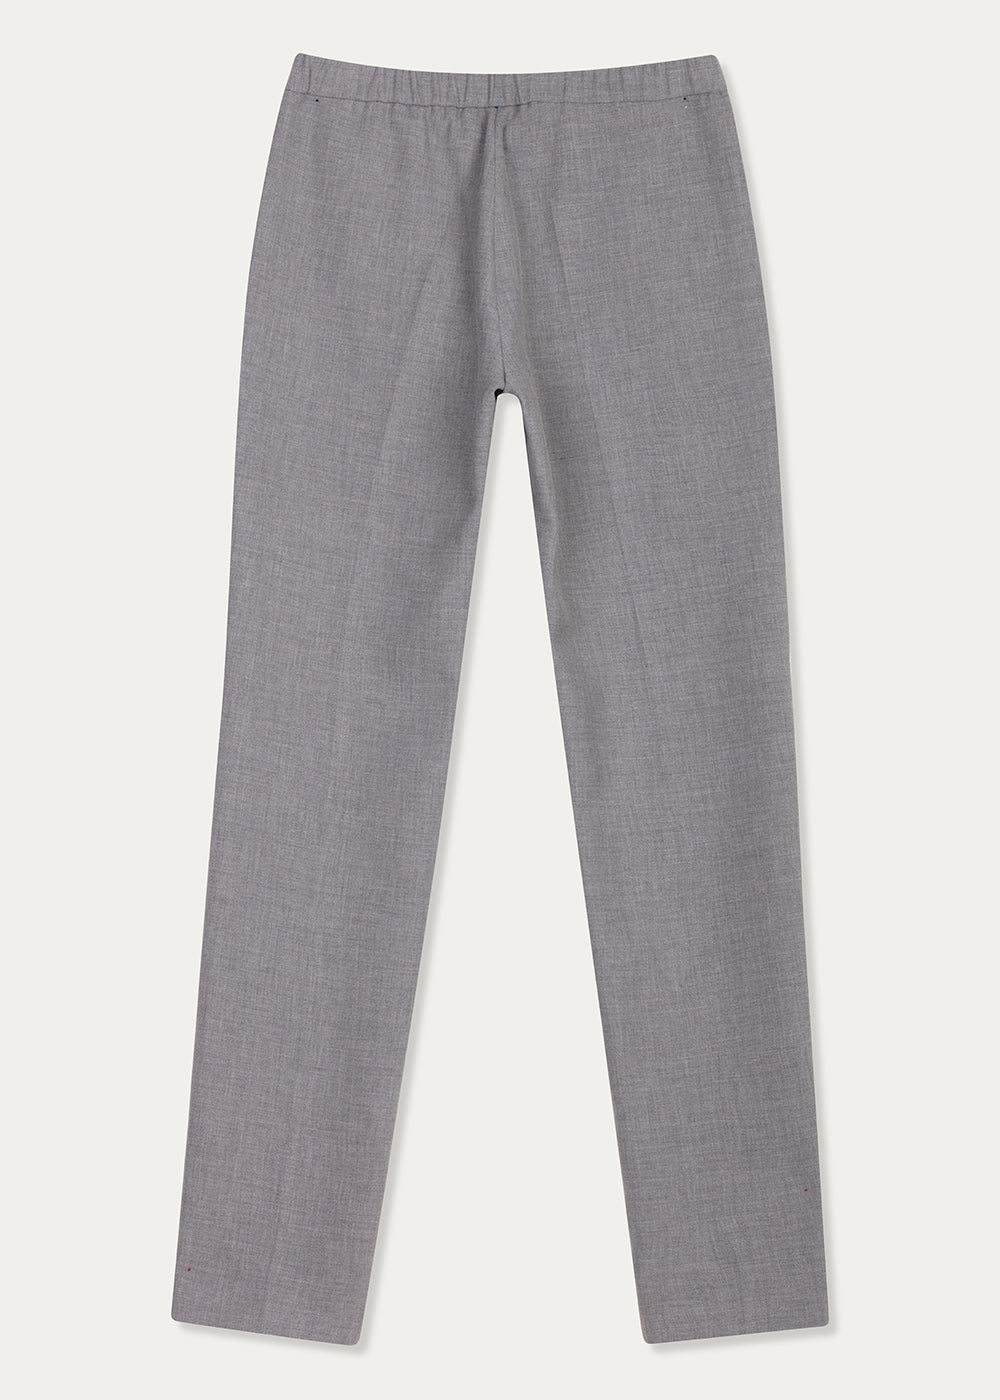 Pantalon avec cordon de serrage gris